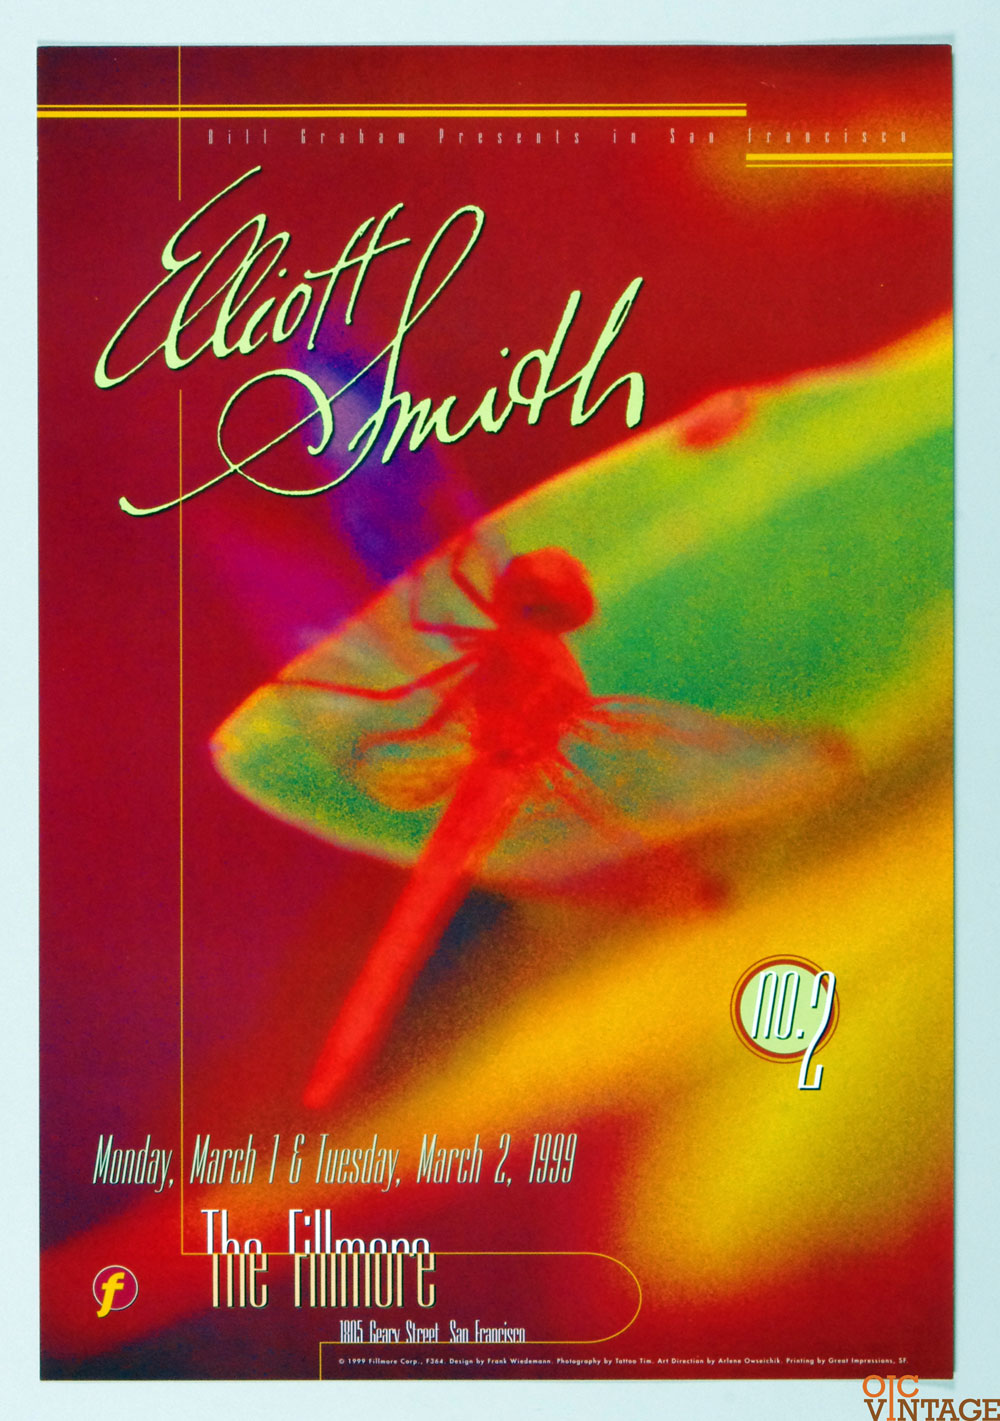 Eliott Smith Poster 1999 Mar 2 New Fillmore